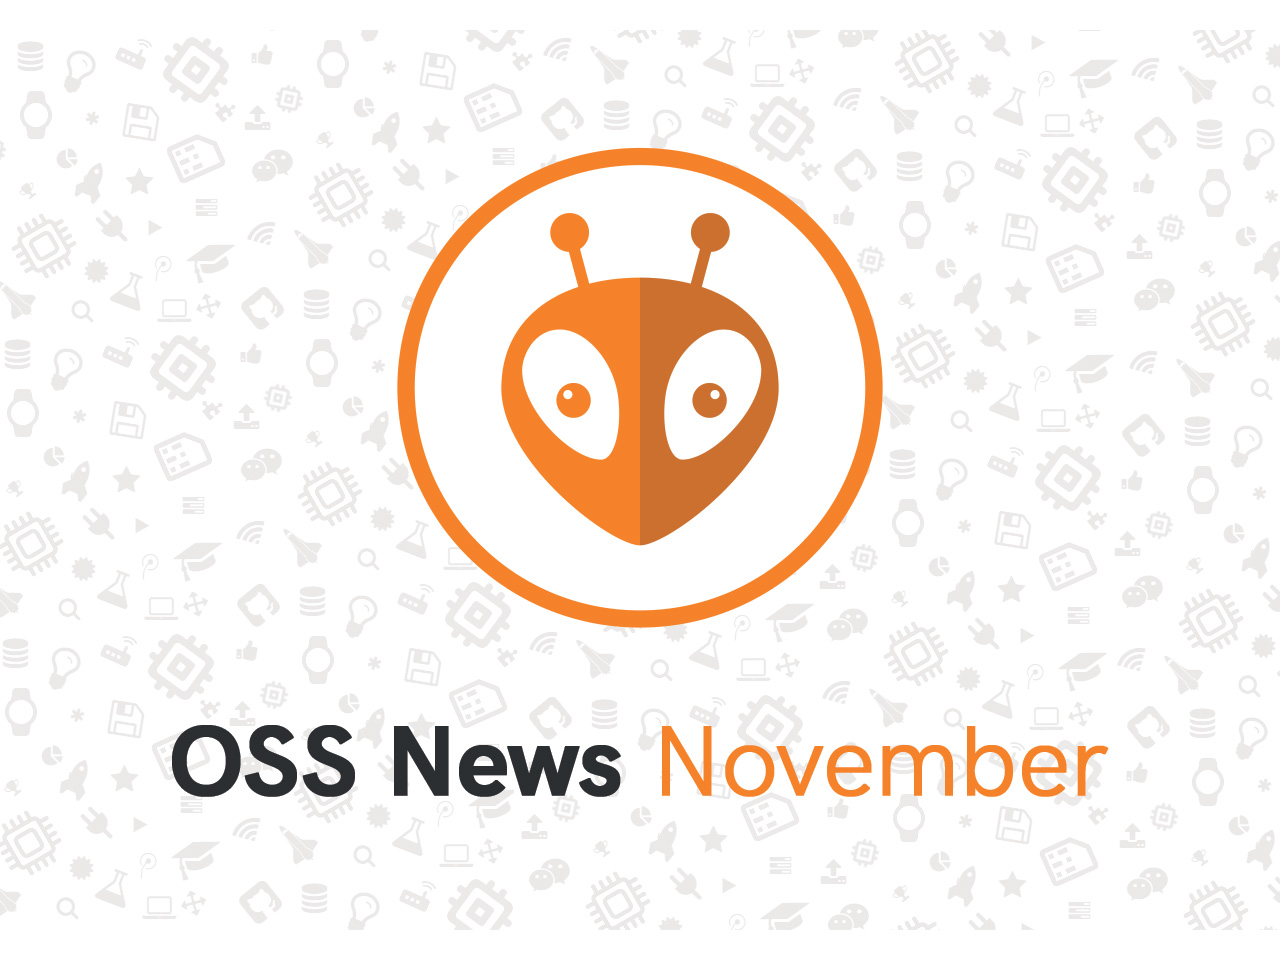 PlatformIO Open Source November Updates